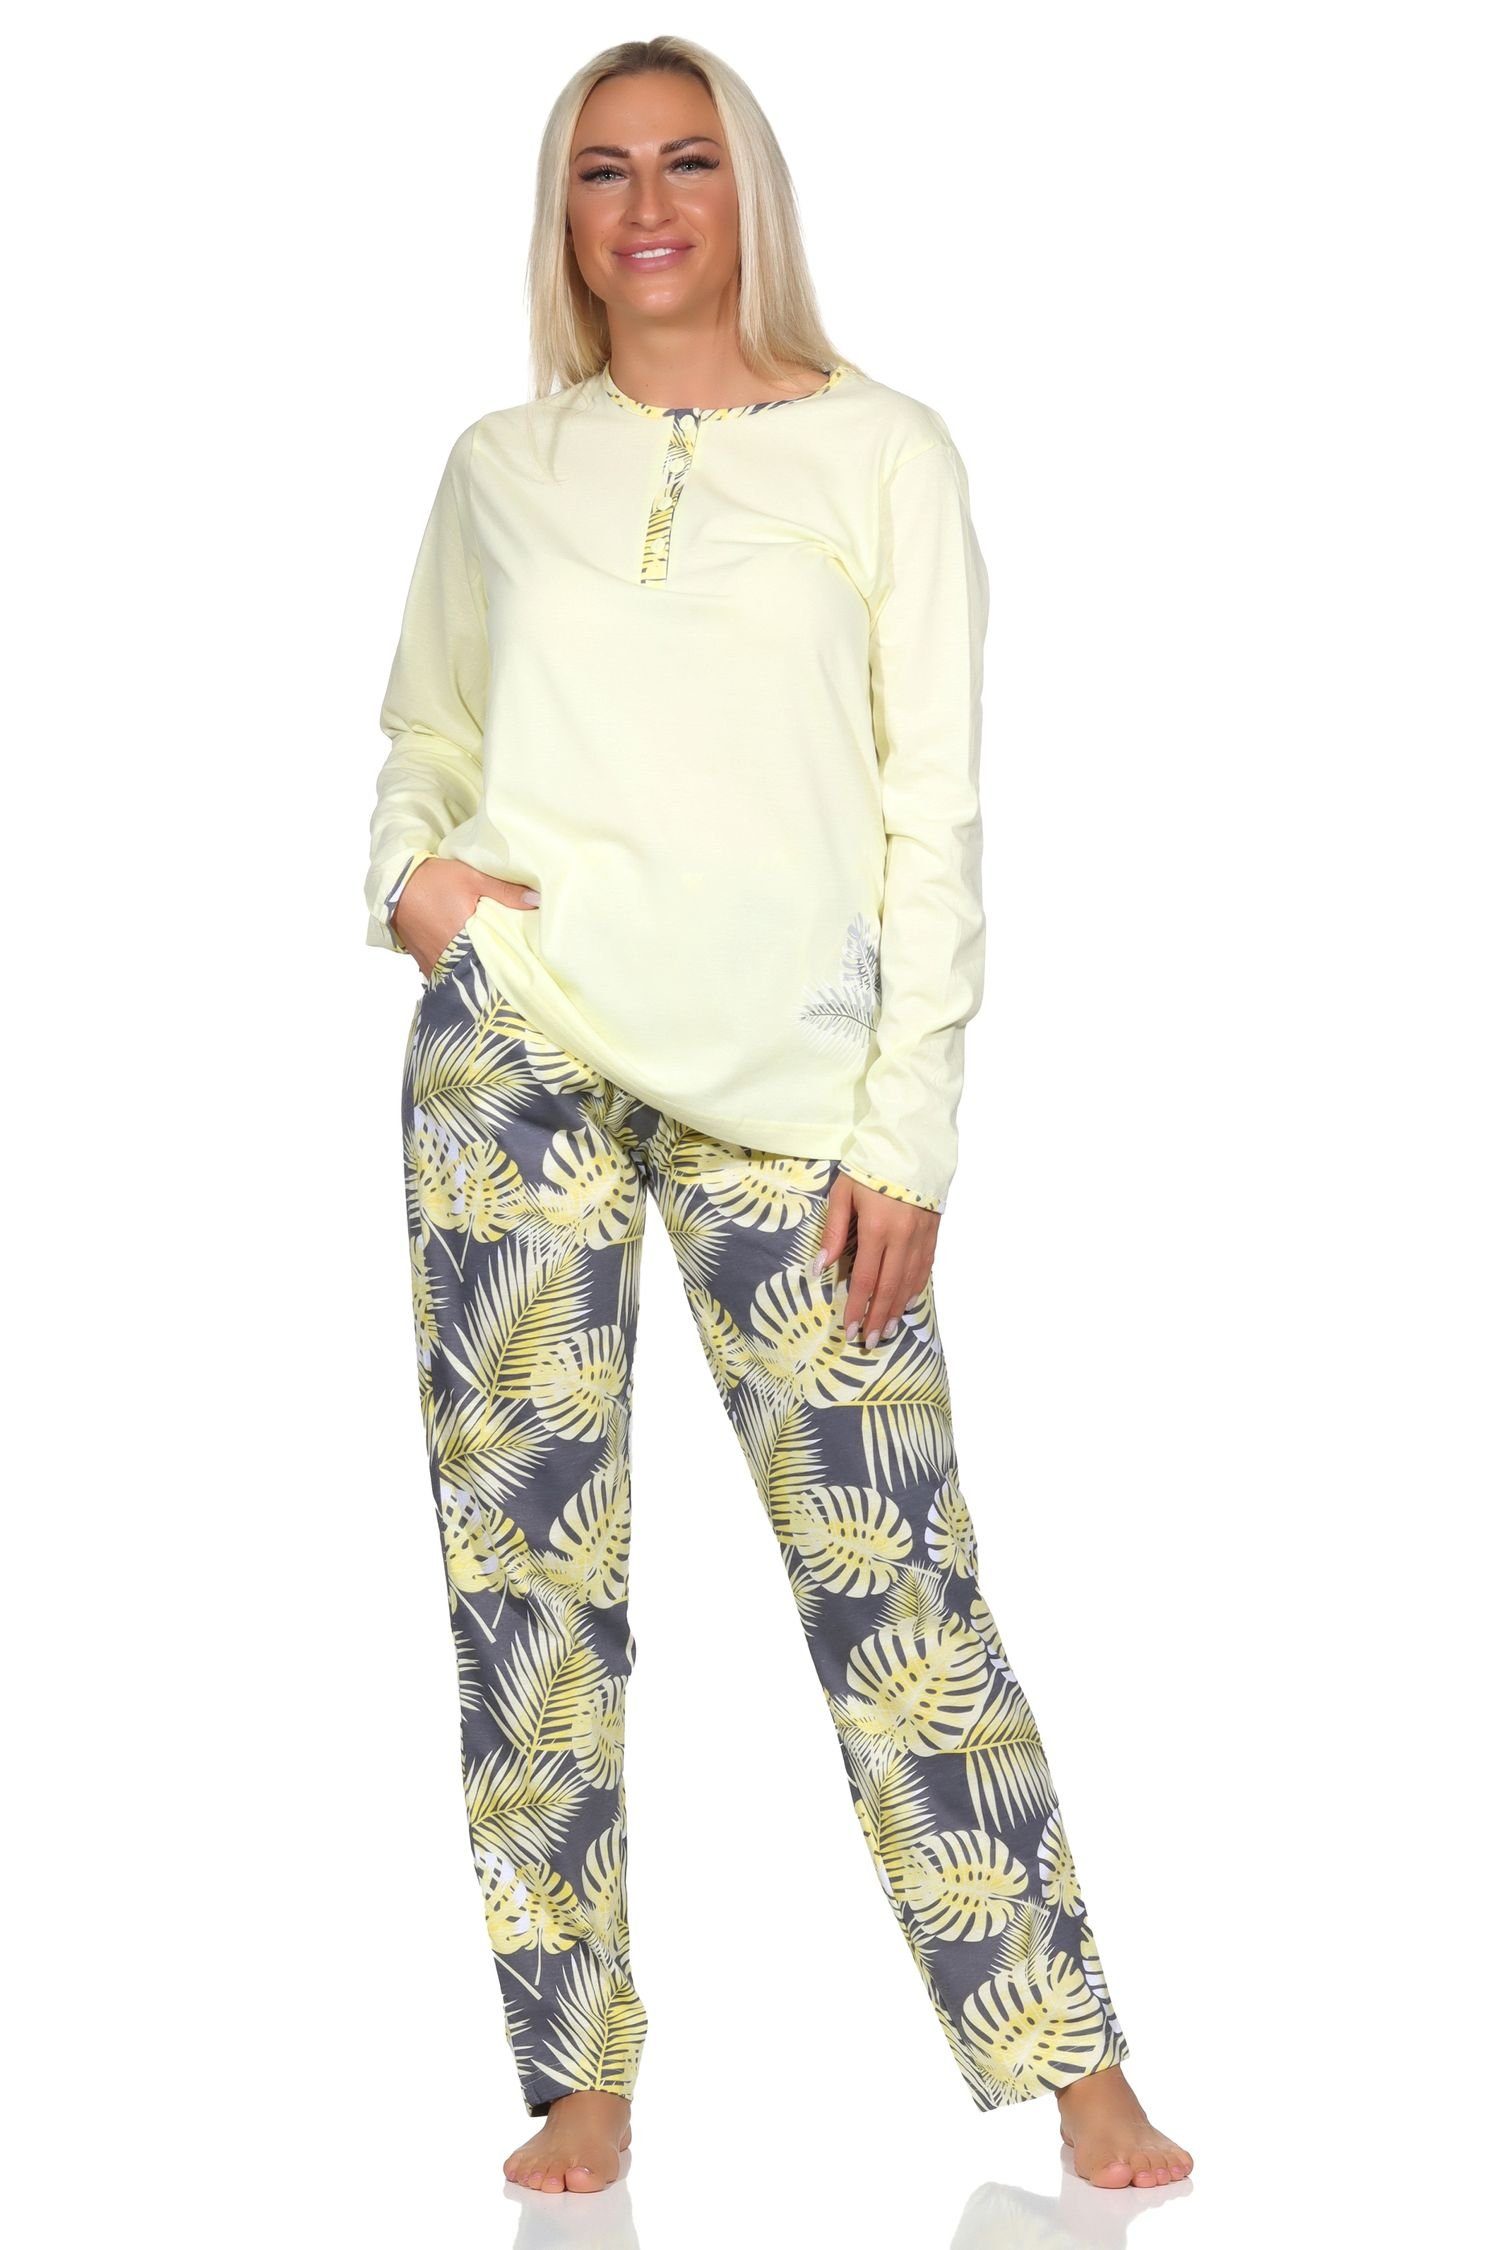 Normann Normann Schlafanzug Damen Pyjama Pyjama floralem Print in Hose langarm mit